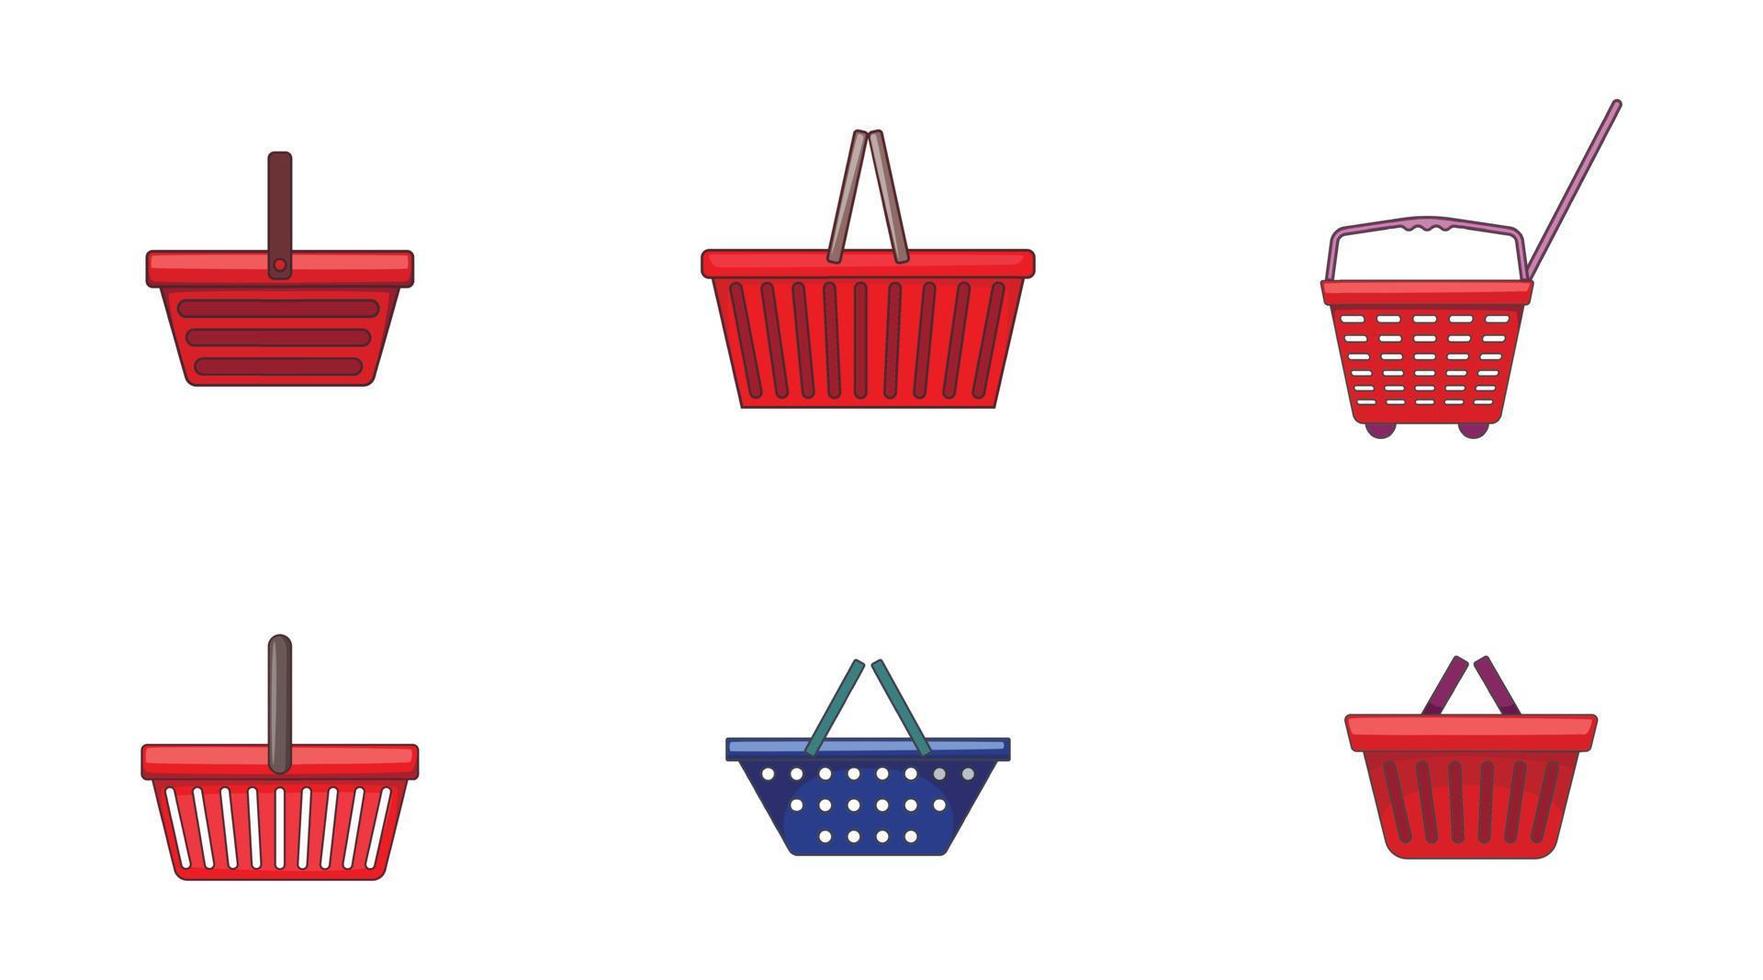 Shop basket icon set, cartoon style vector